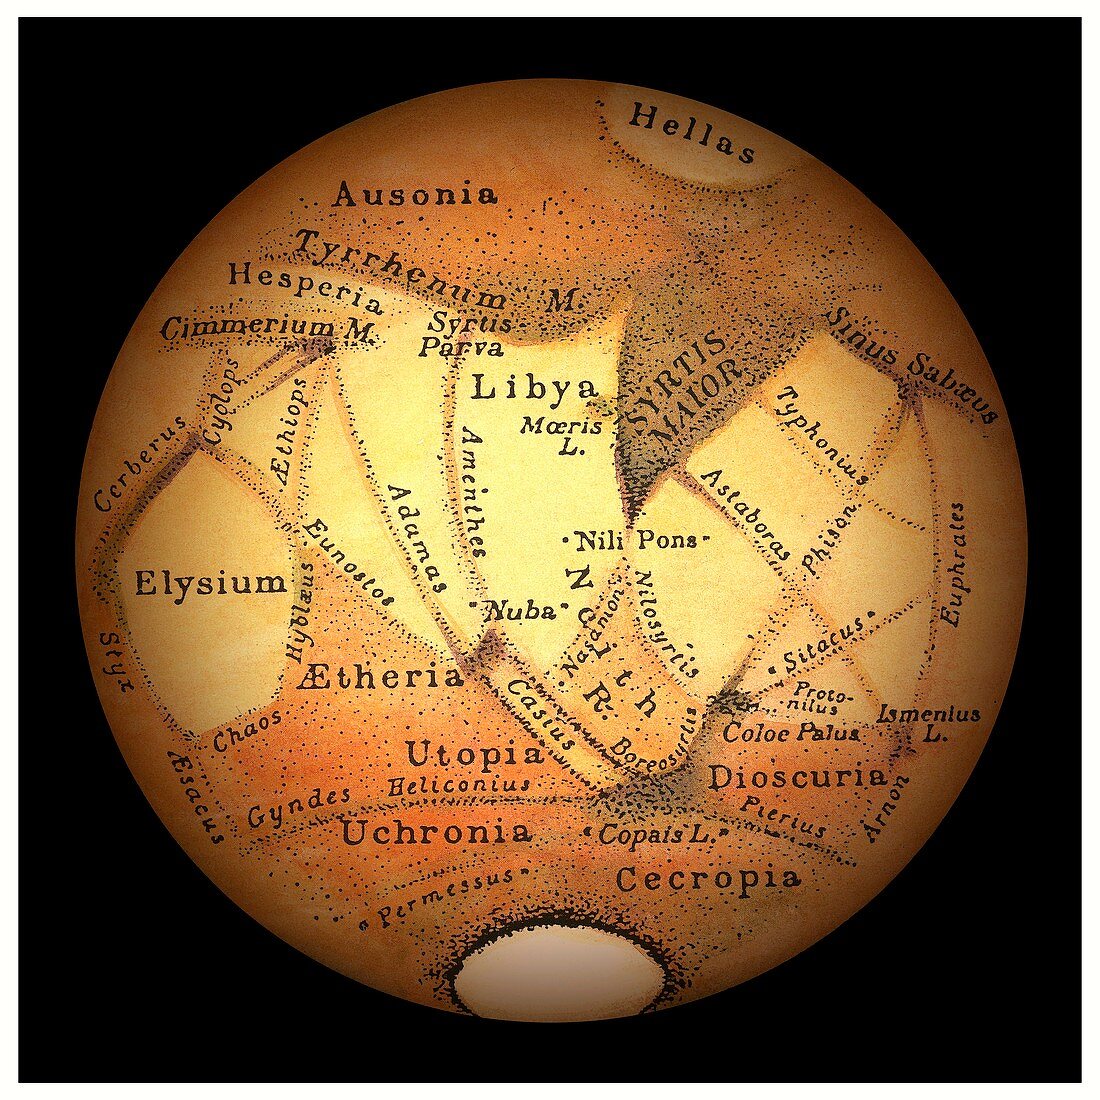 Schiaparelli's observations of Mars